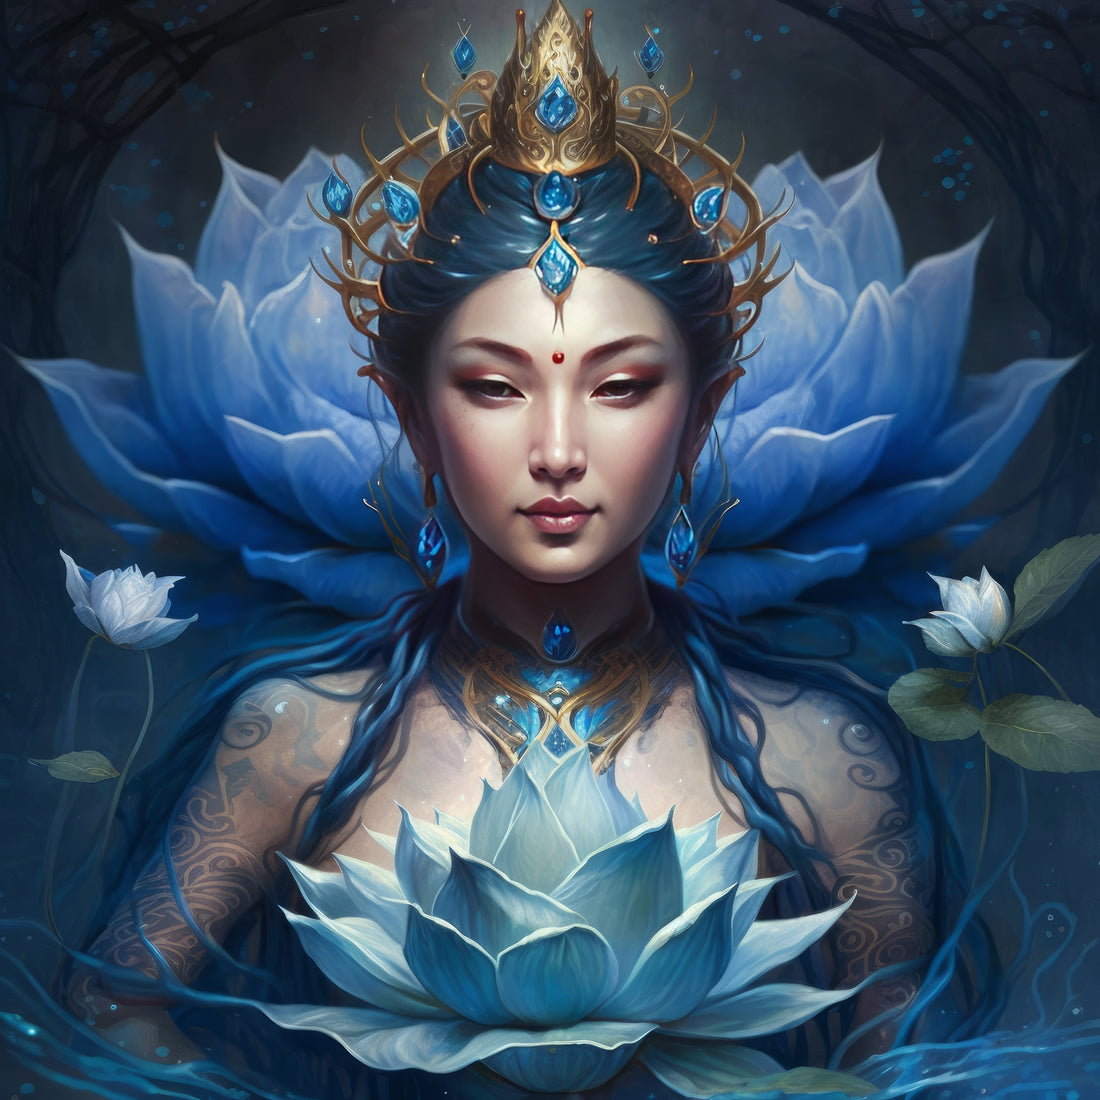 Kuan Yin: The Compassionate Bodhisattva of Mercy